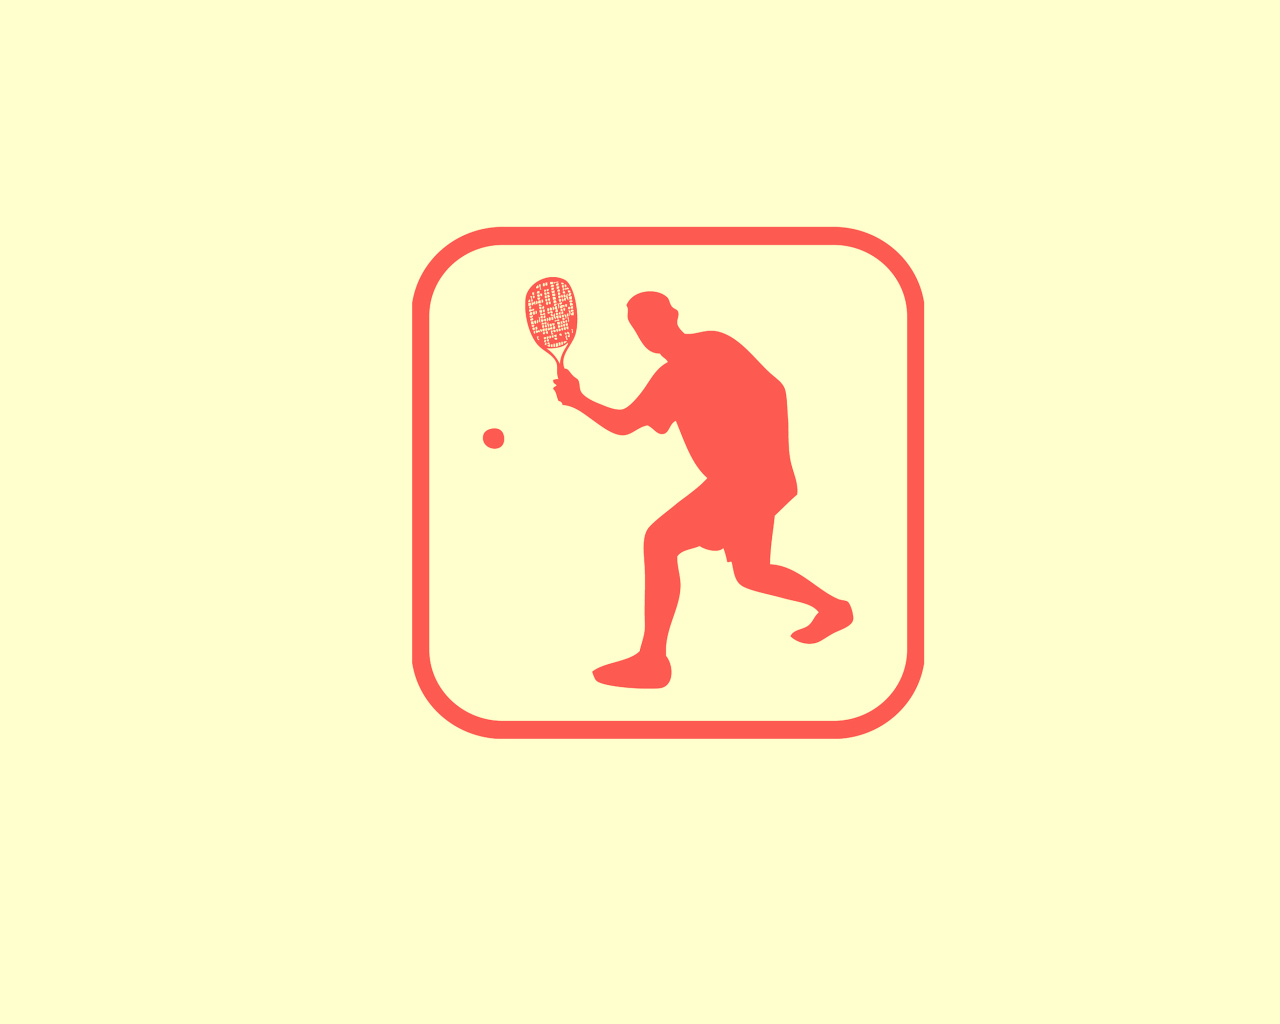 Das Squash Game Logo Wallpaper 1280x1024